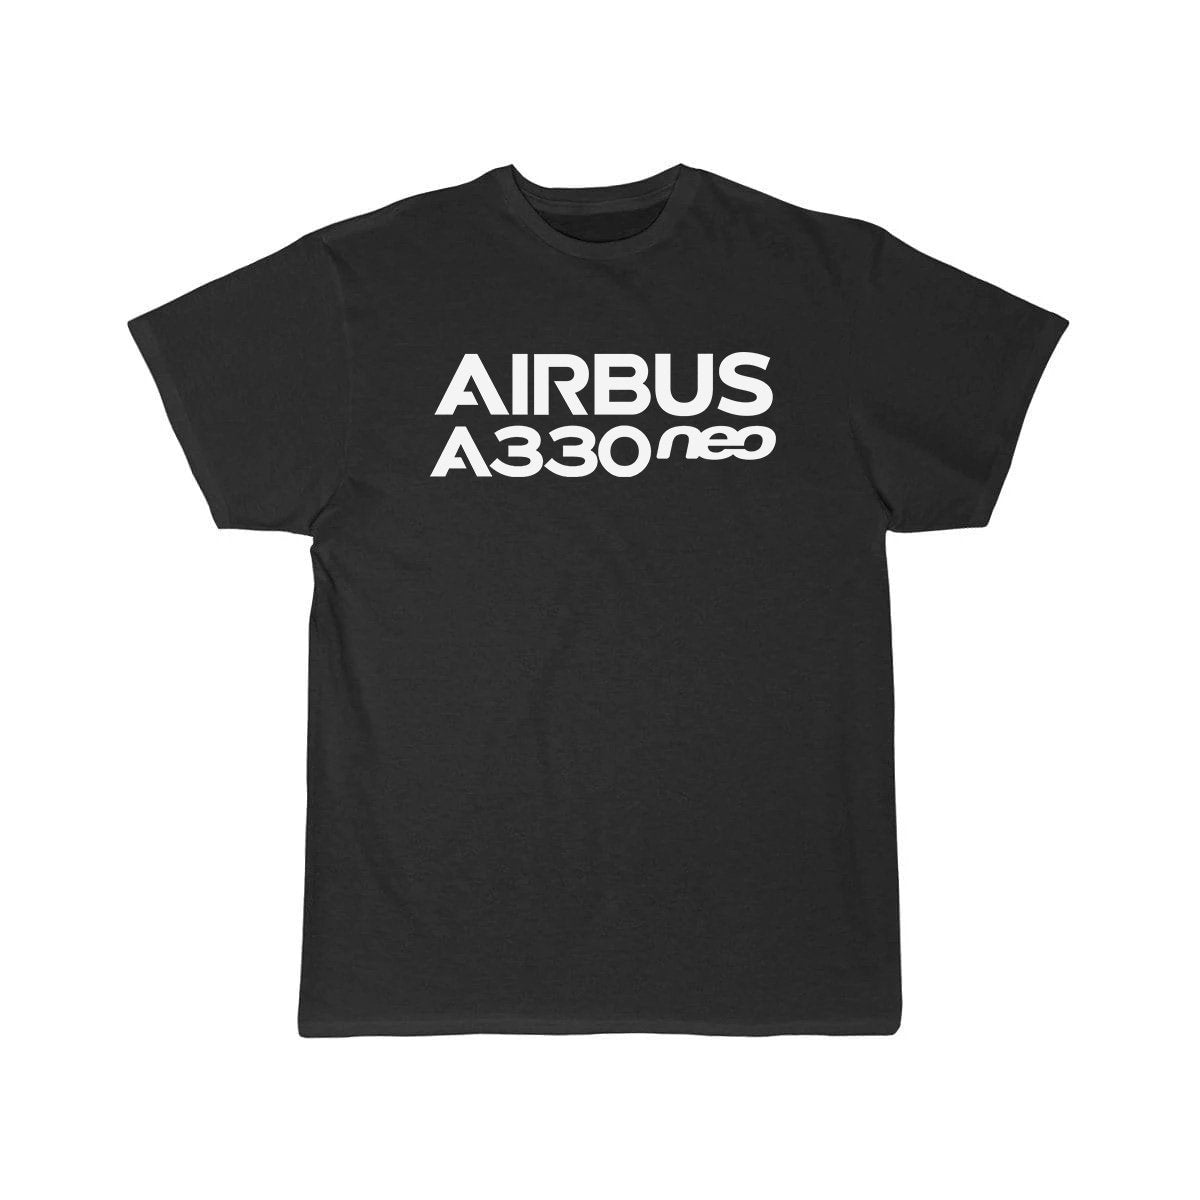 Airbus A330Neo Aviation Pilot T-Shirt THE AV8R